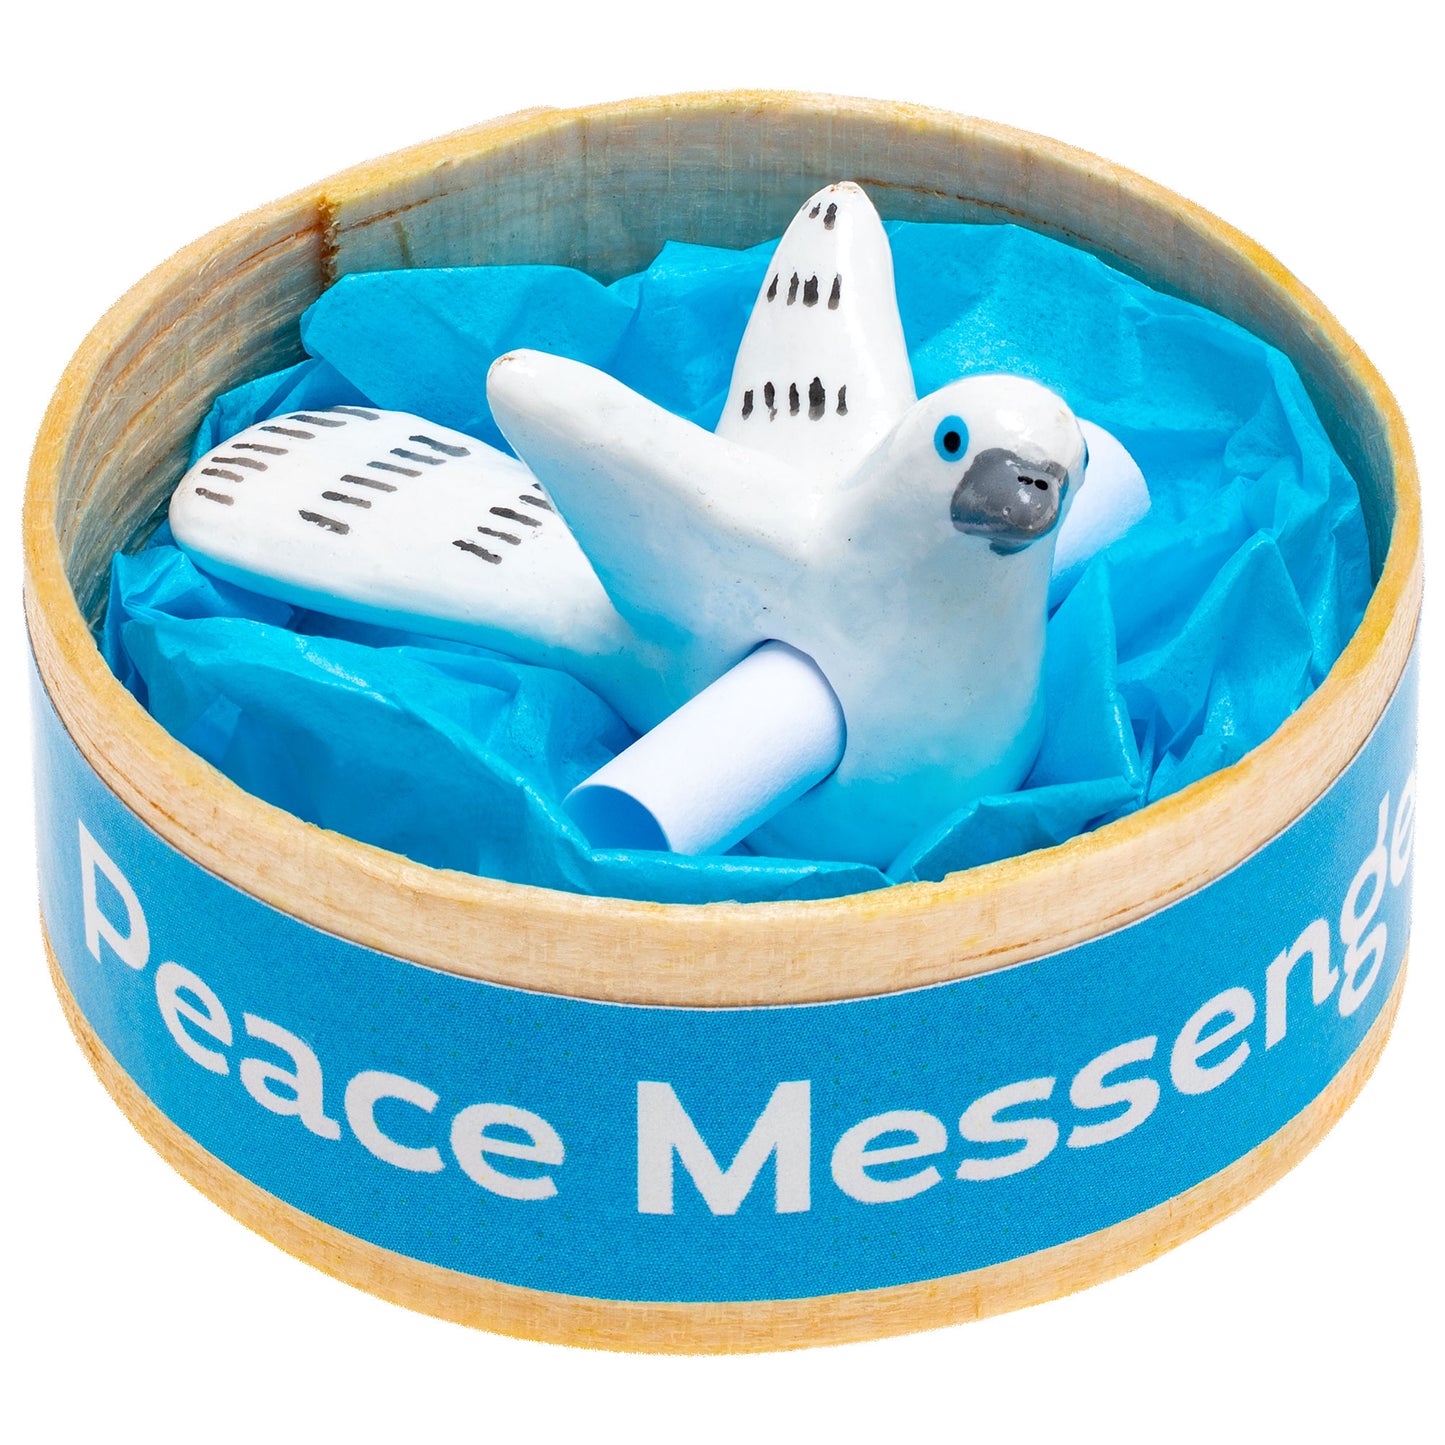 Ceramic Dove Peace Messenger